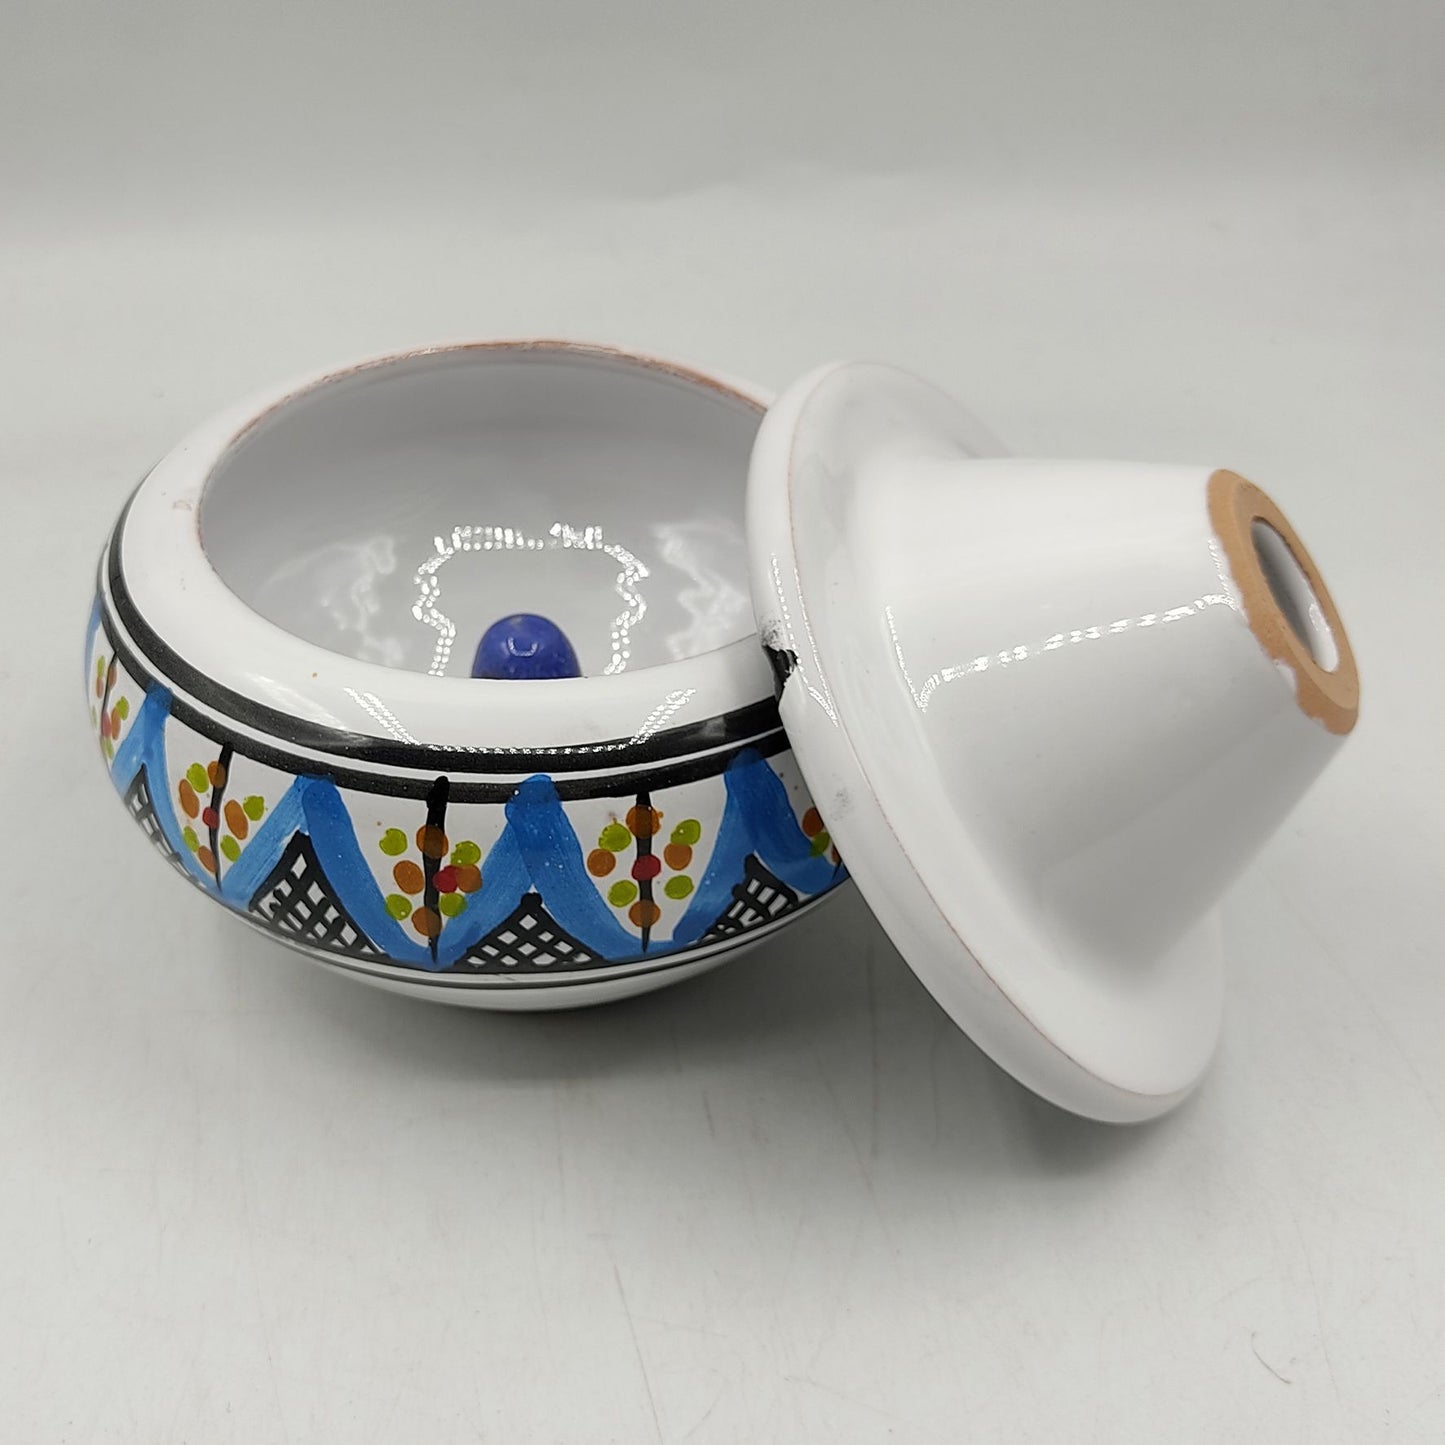 Etnico Arredo Posacenere Ceramica Antiodore Tunisina Marocchine 2007211104